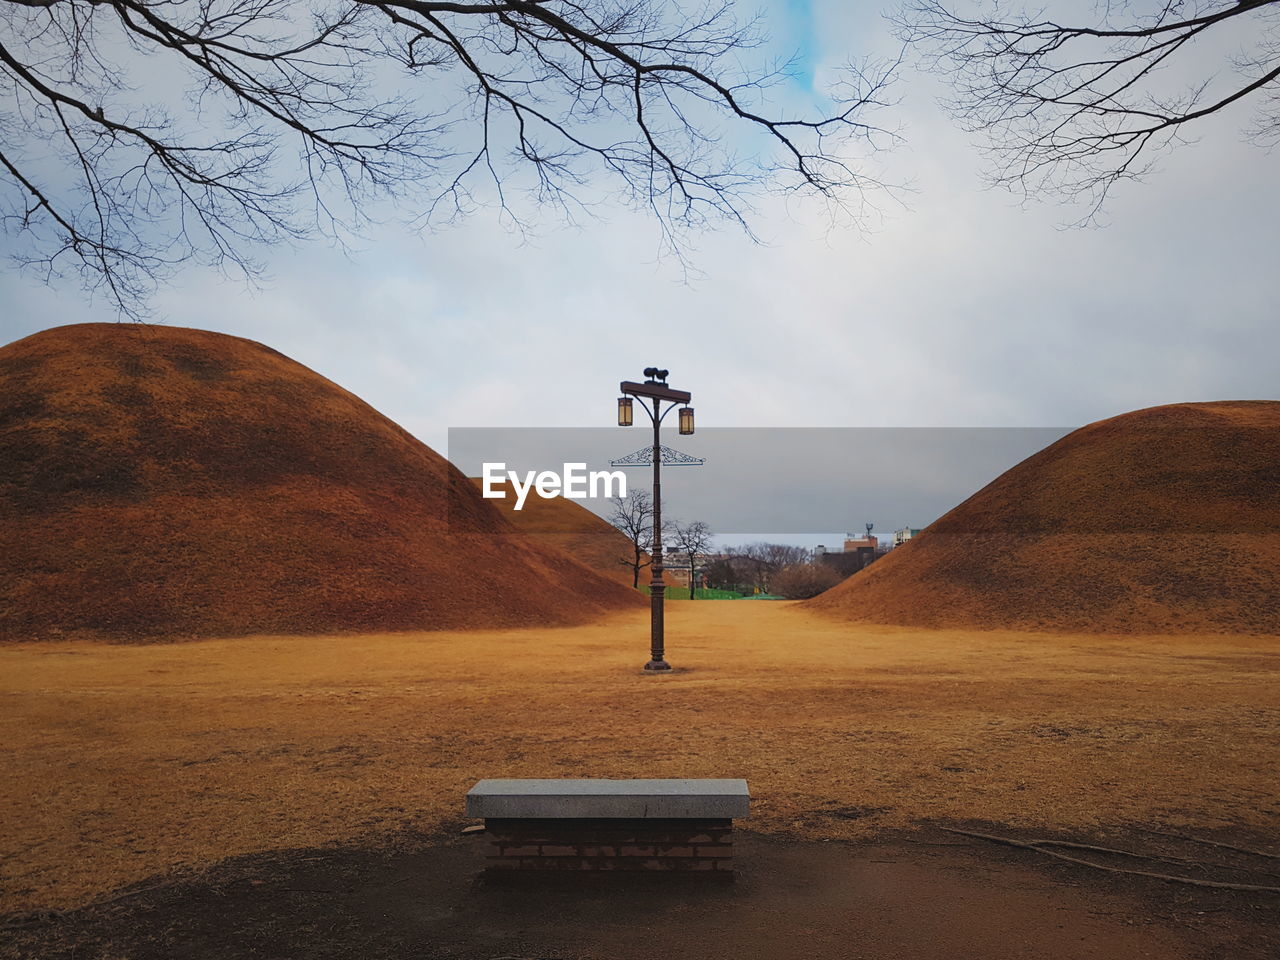 Burial site park in daereungwon, gyeonju, south korea . taken in winter.